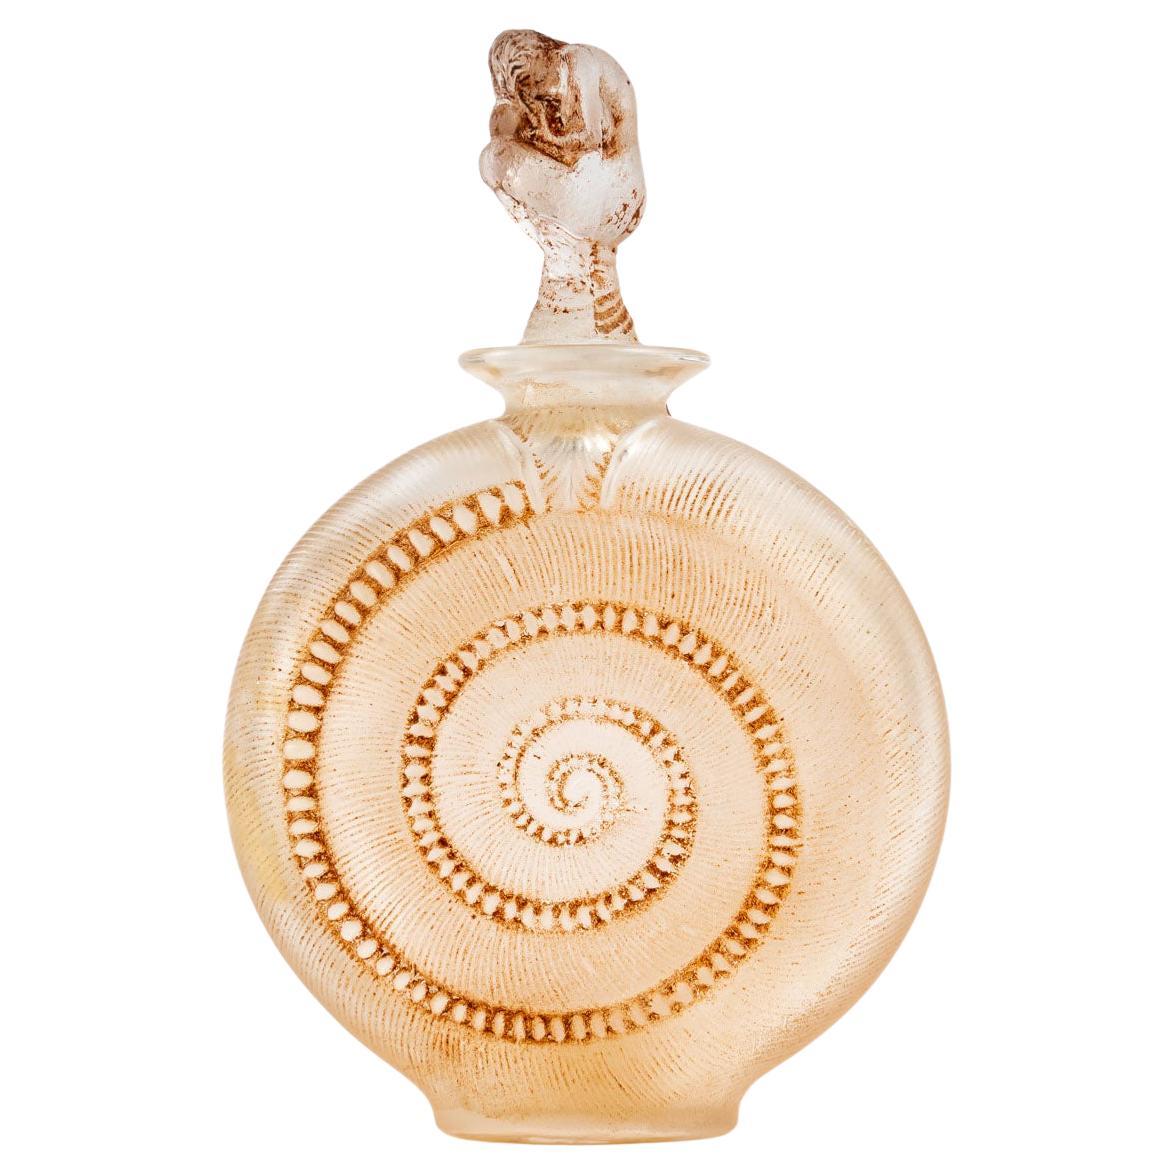 1914 René Lalique Le Succes Perfume Bottle for D'Orsay Glass with Sepia Patina